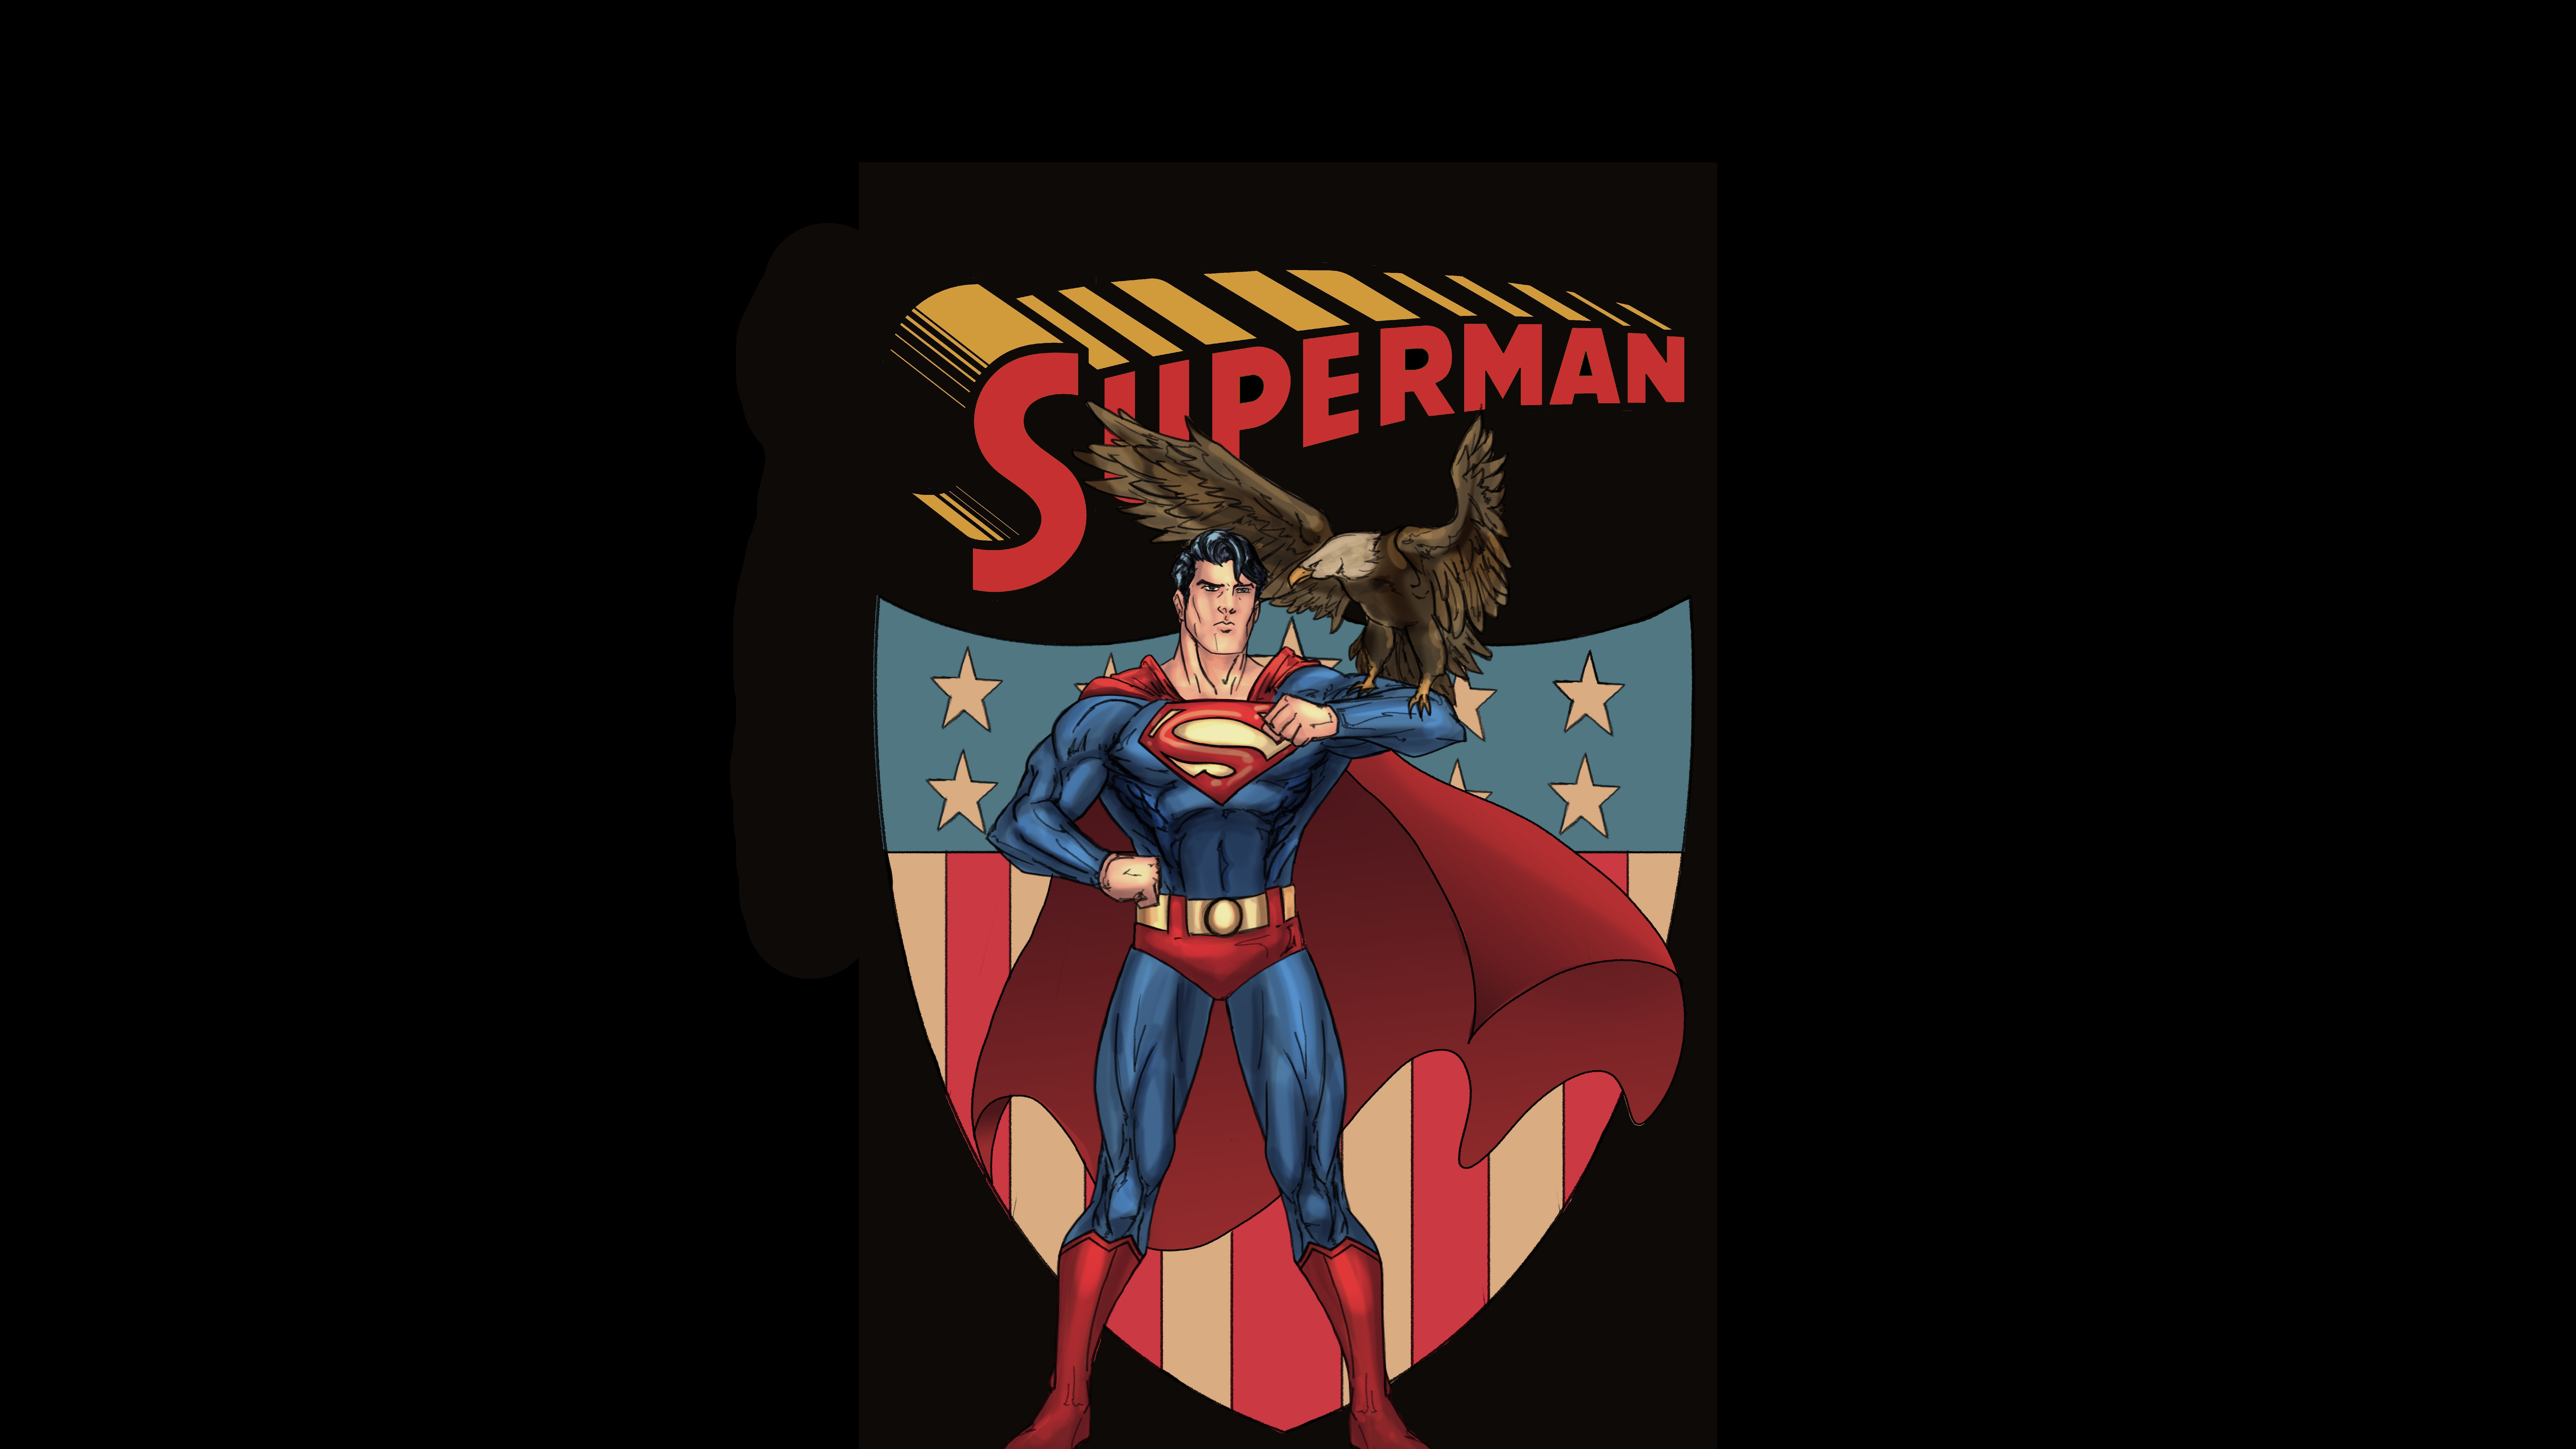 Batman V Superman Dawn Of Justice Henry Cavill Ultra HD Desktop Background  Wallpaper for 4K UHD TV : Widescreen & UltraWide Desktop & Laptop : Tablet  : Smartphone